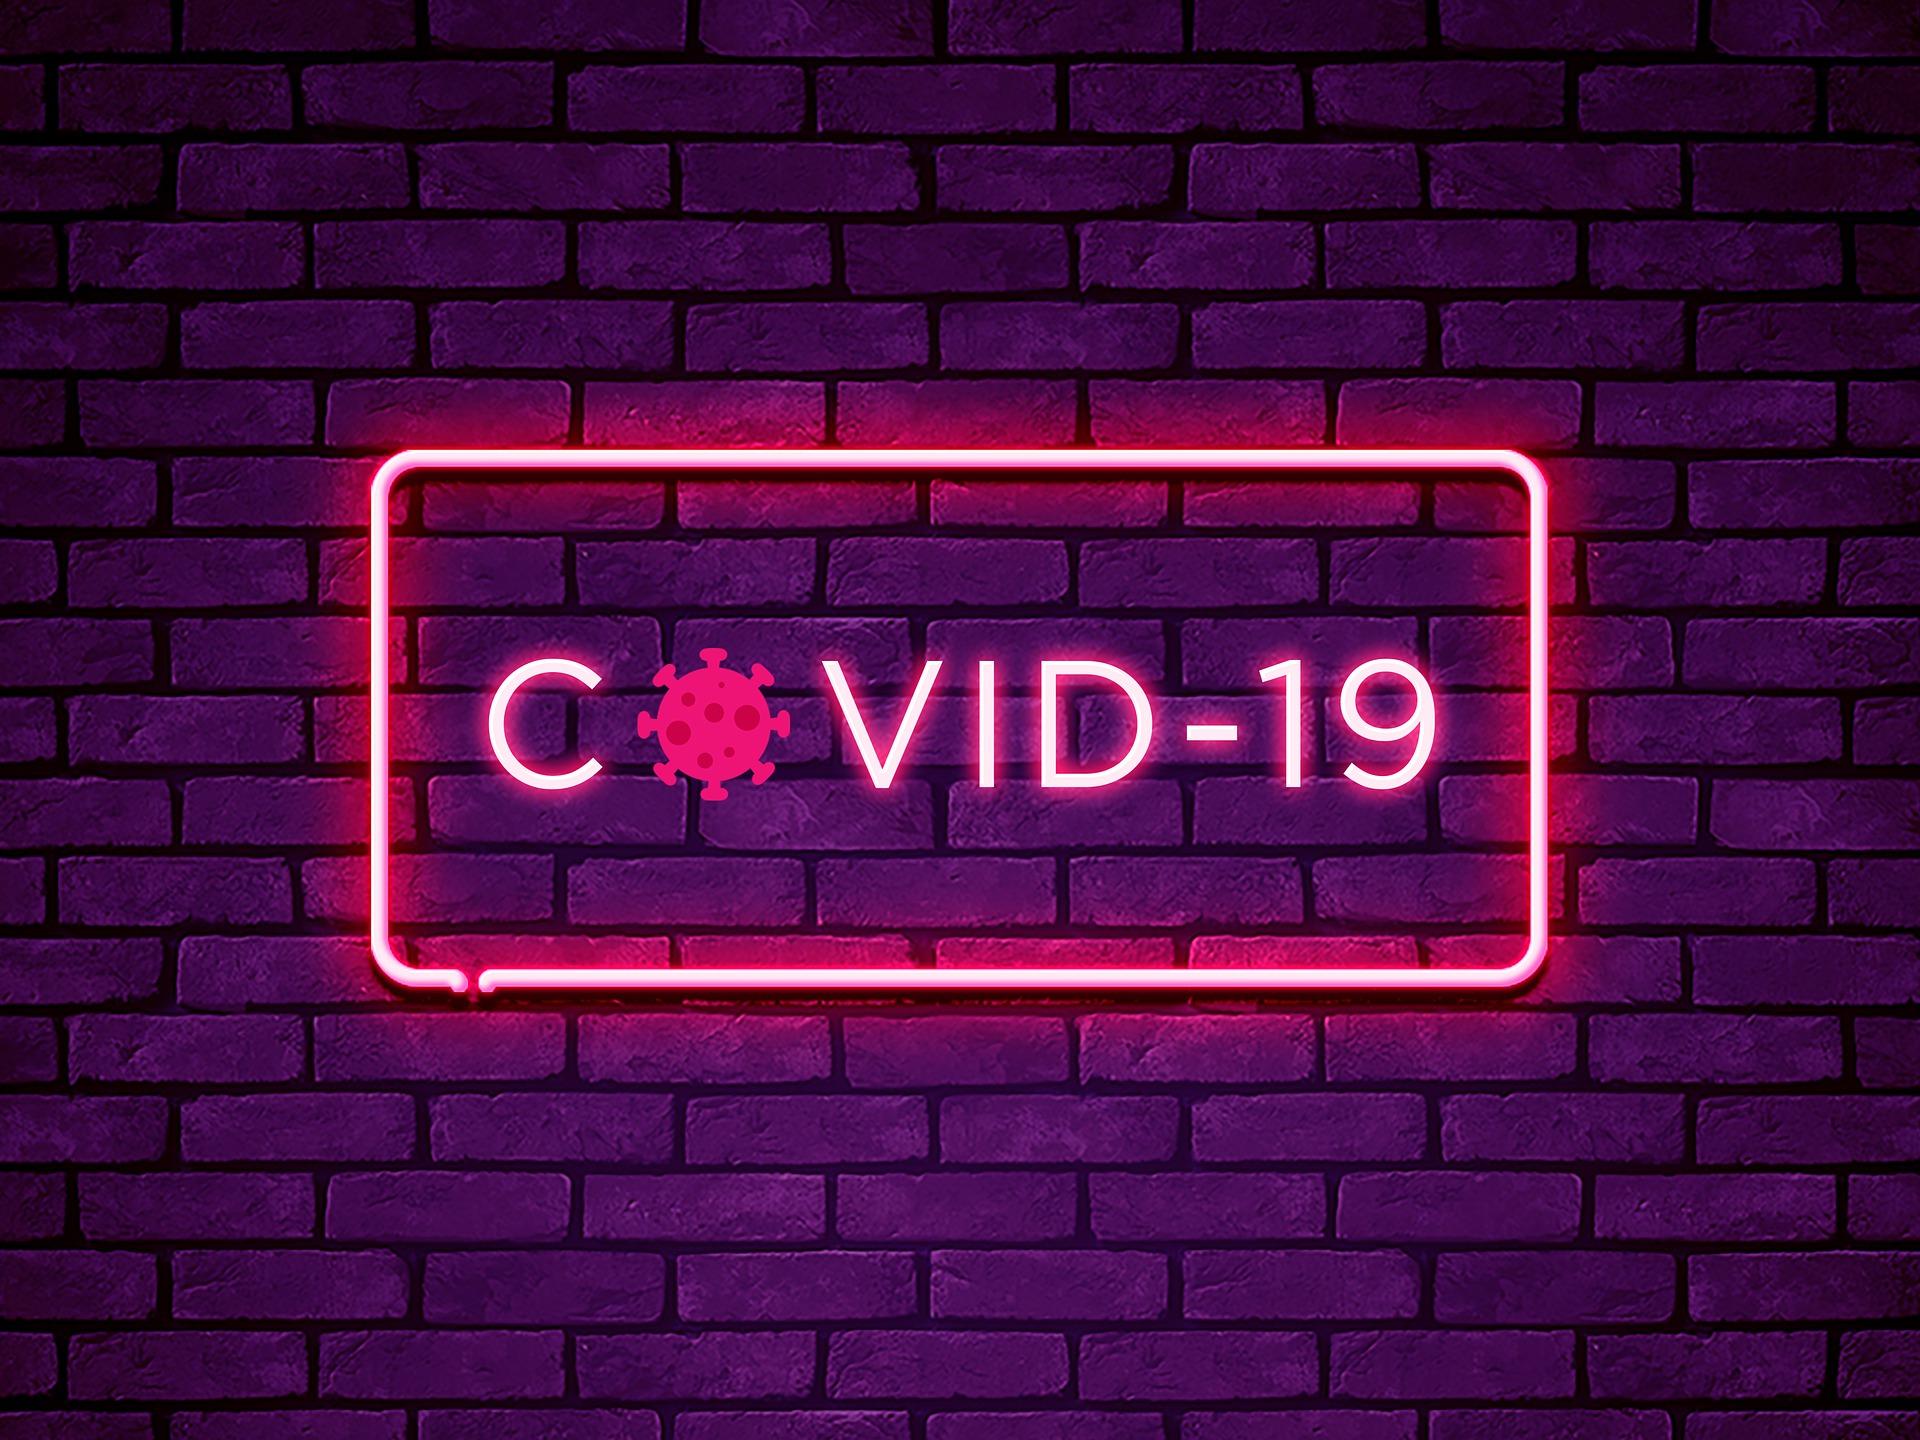 Covid 19 illuminated image